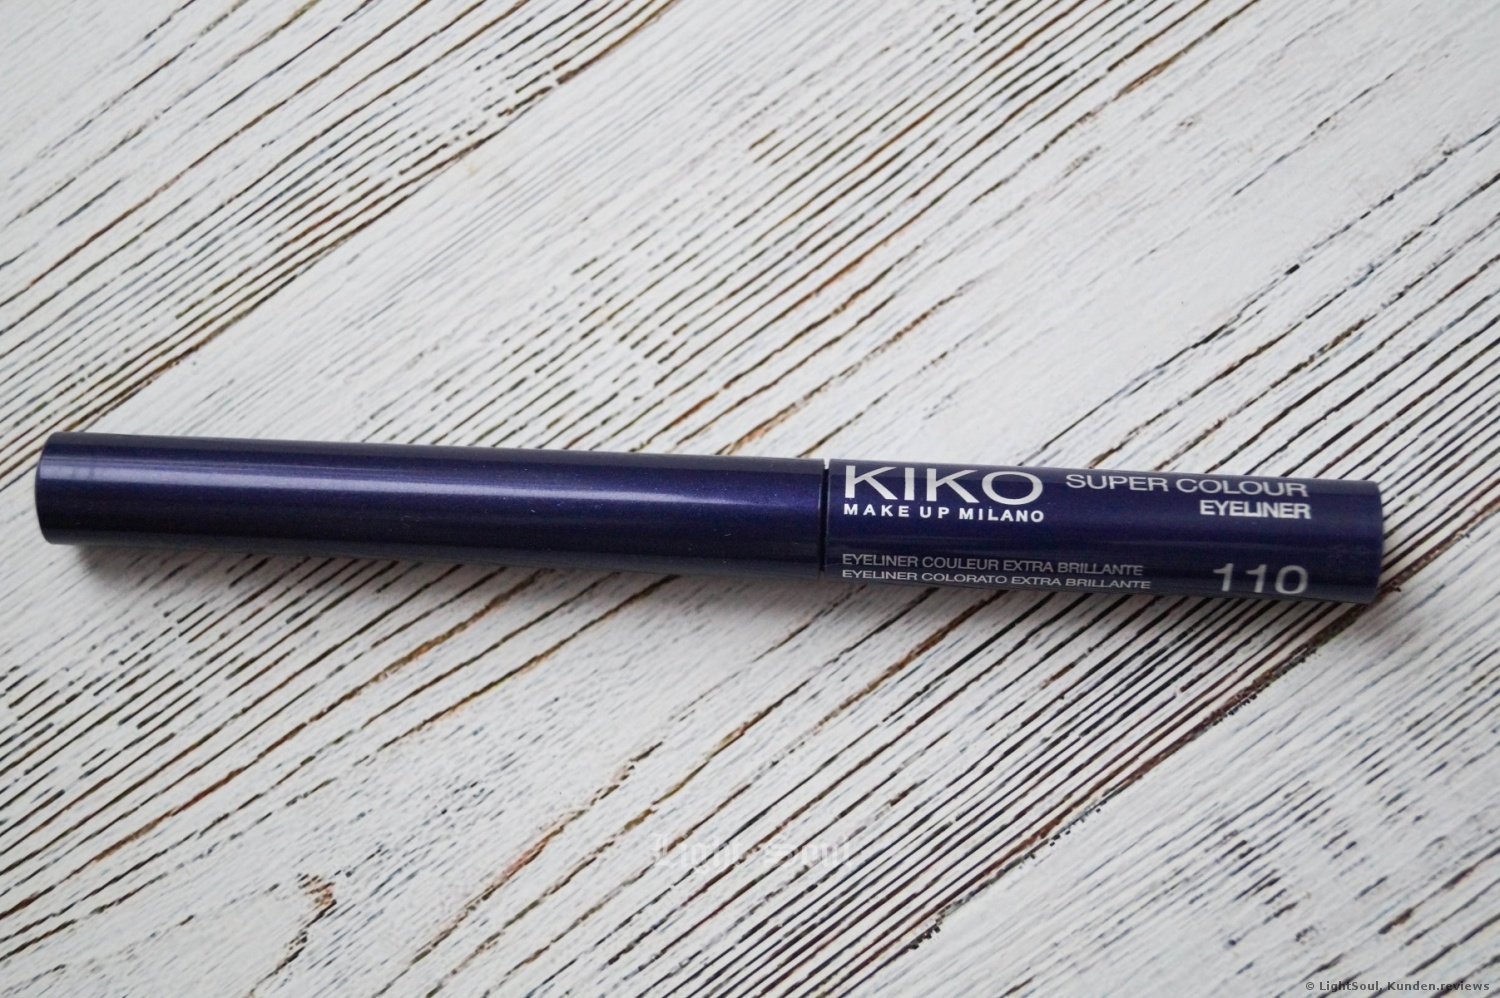 KIKO Super Colour Eyeliner 110 Pearly Regal Purple